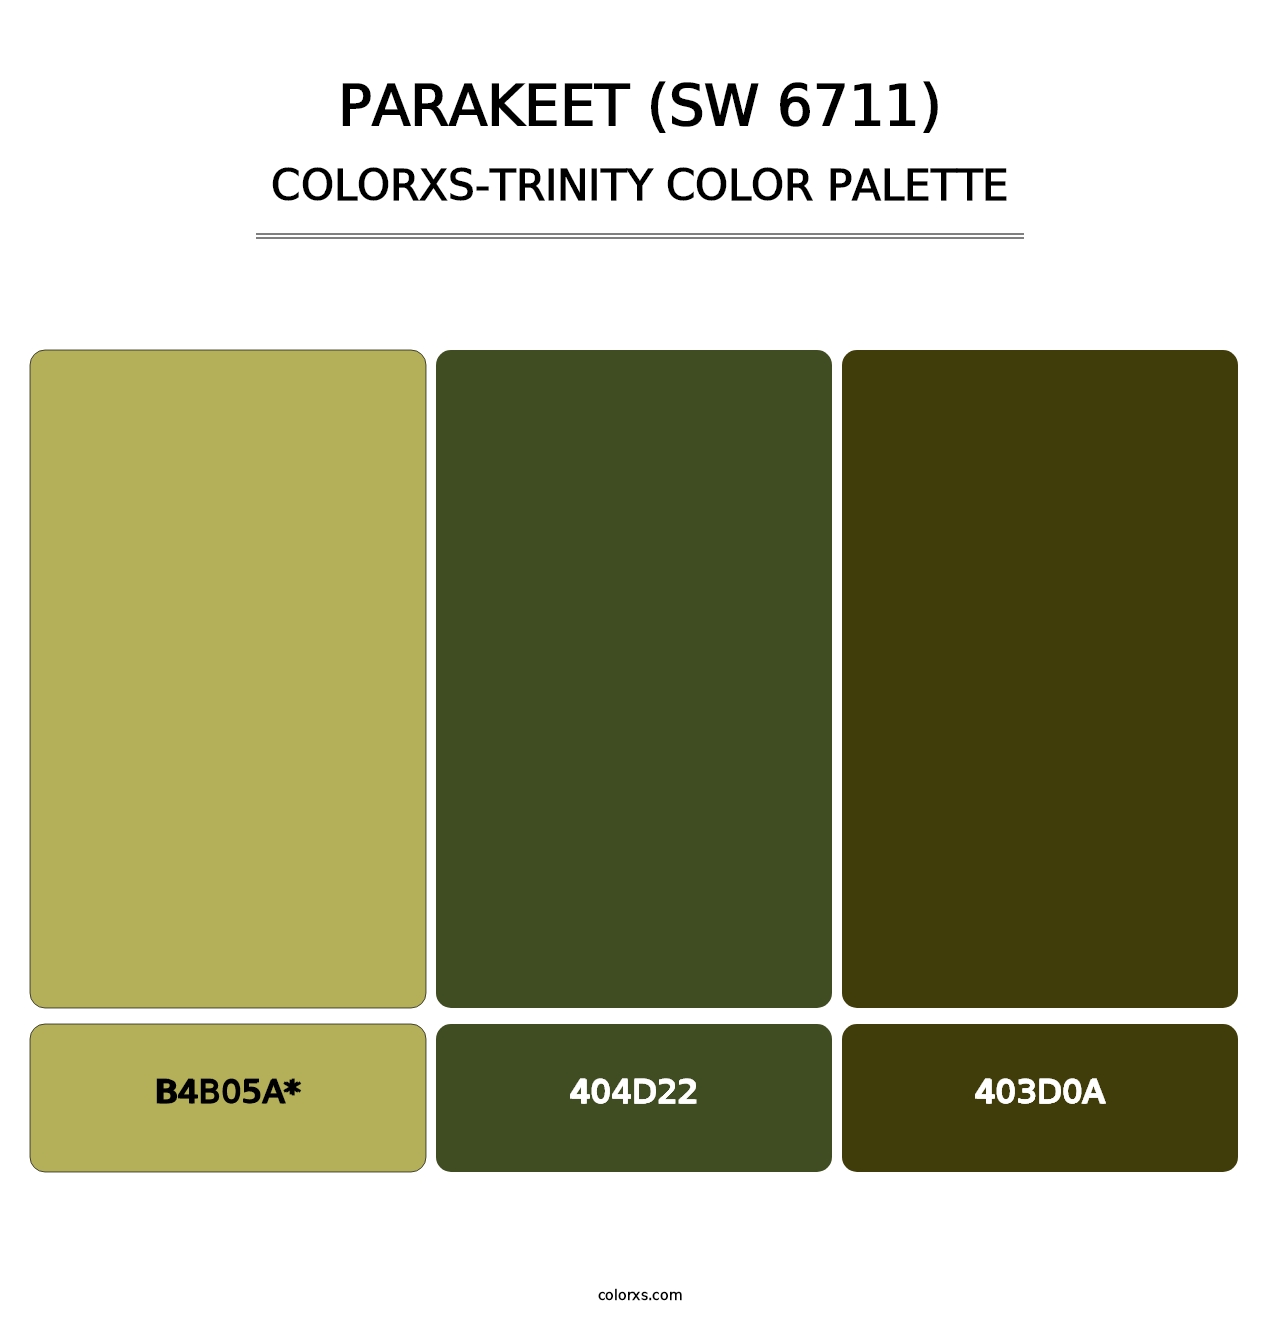 Parakeet (SW 6711) - Colorxs Trinity Palette